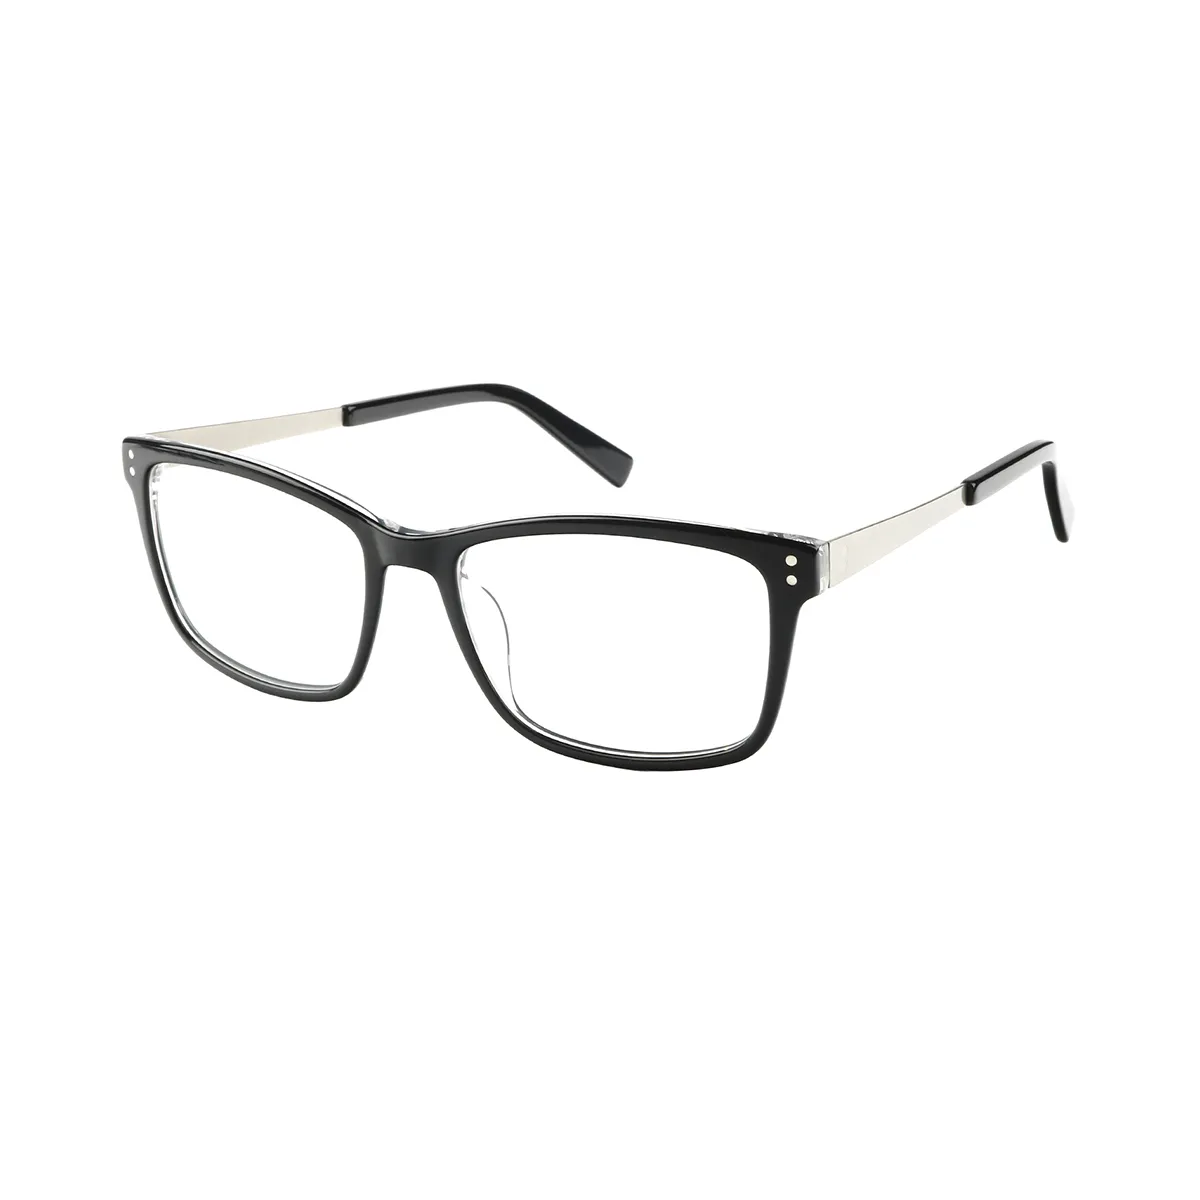 Armison - Square Black Glasses for Men - EFE